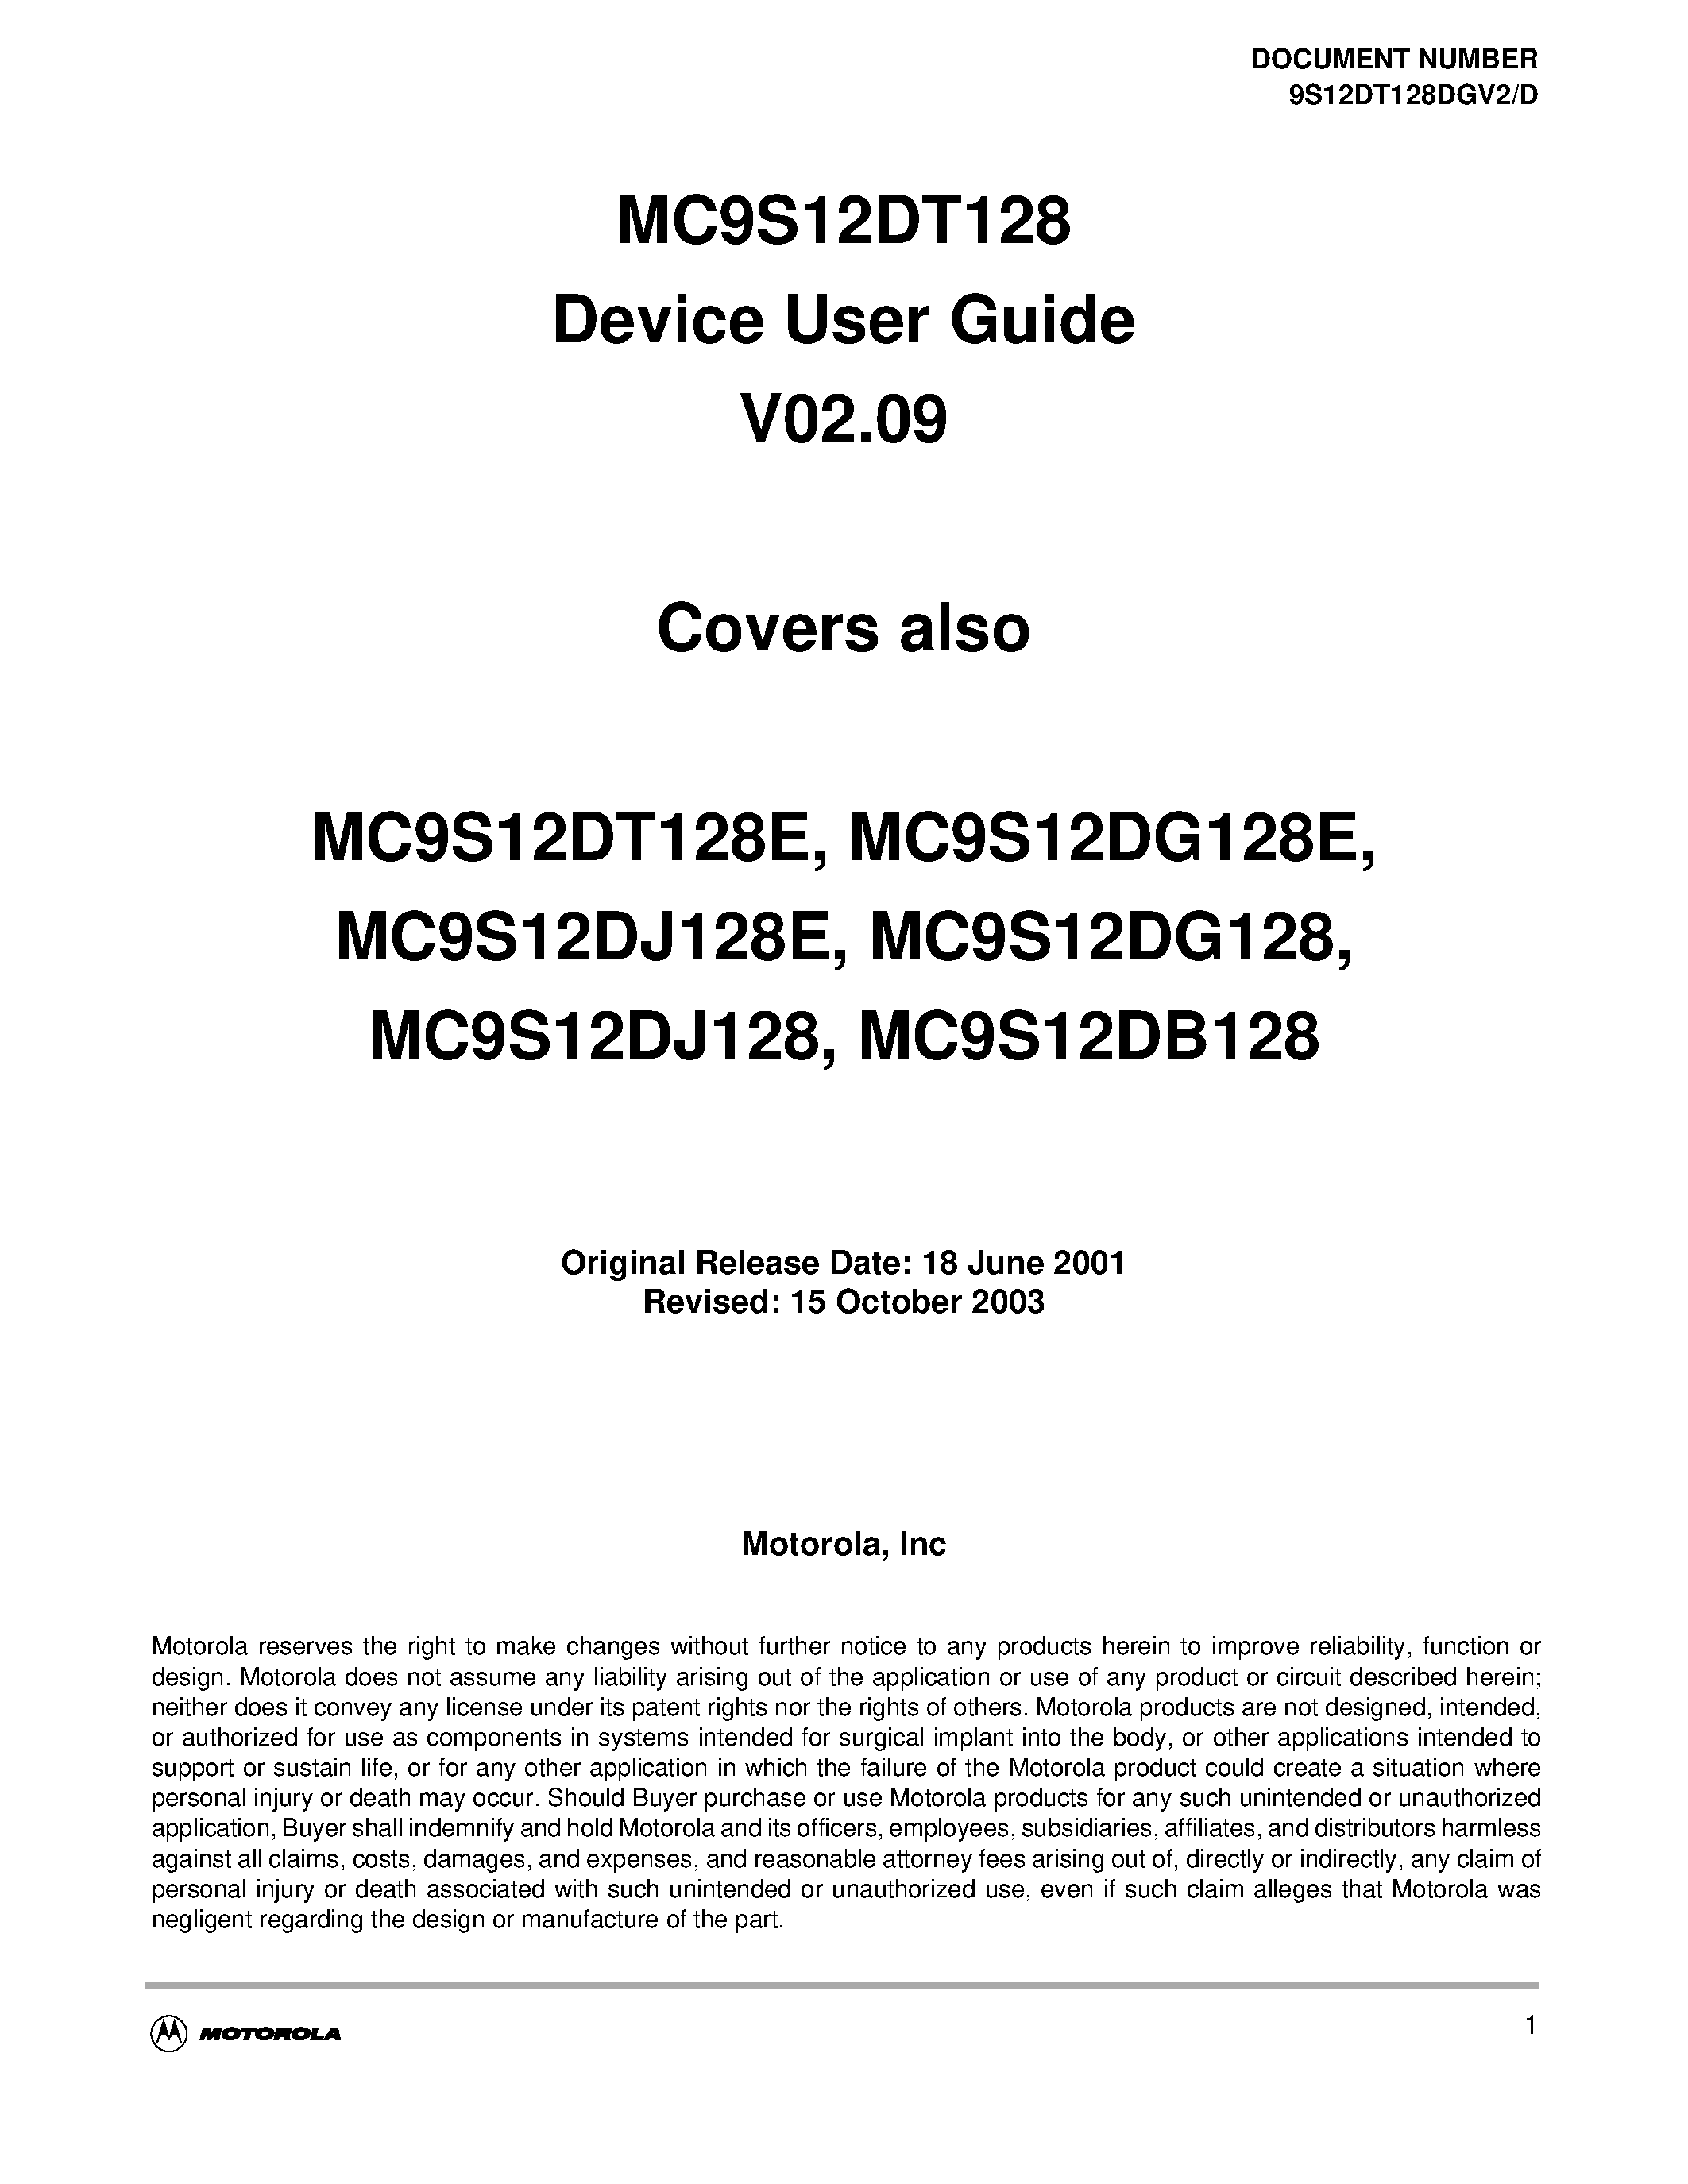 Даташит SC515846 - MC9S12DT128 Device User Guide V02.09 страница 1